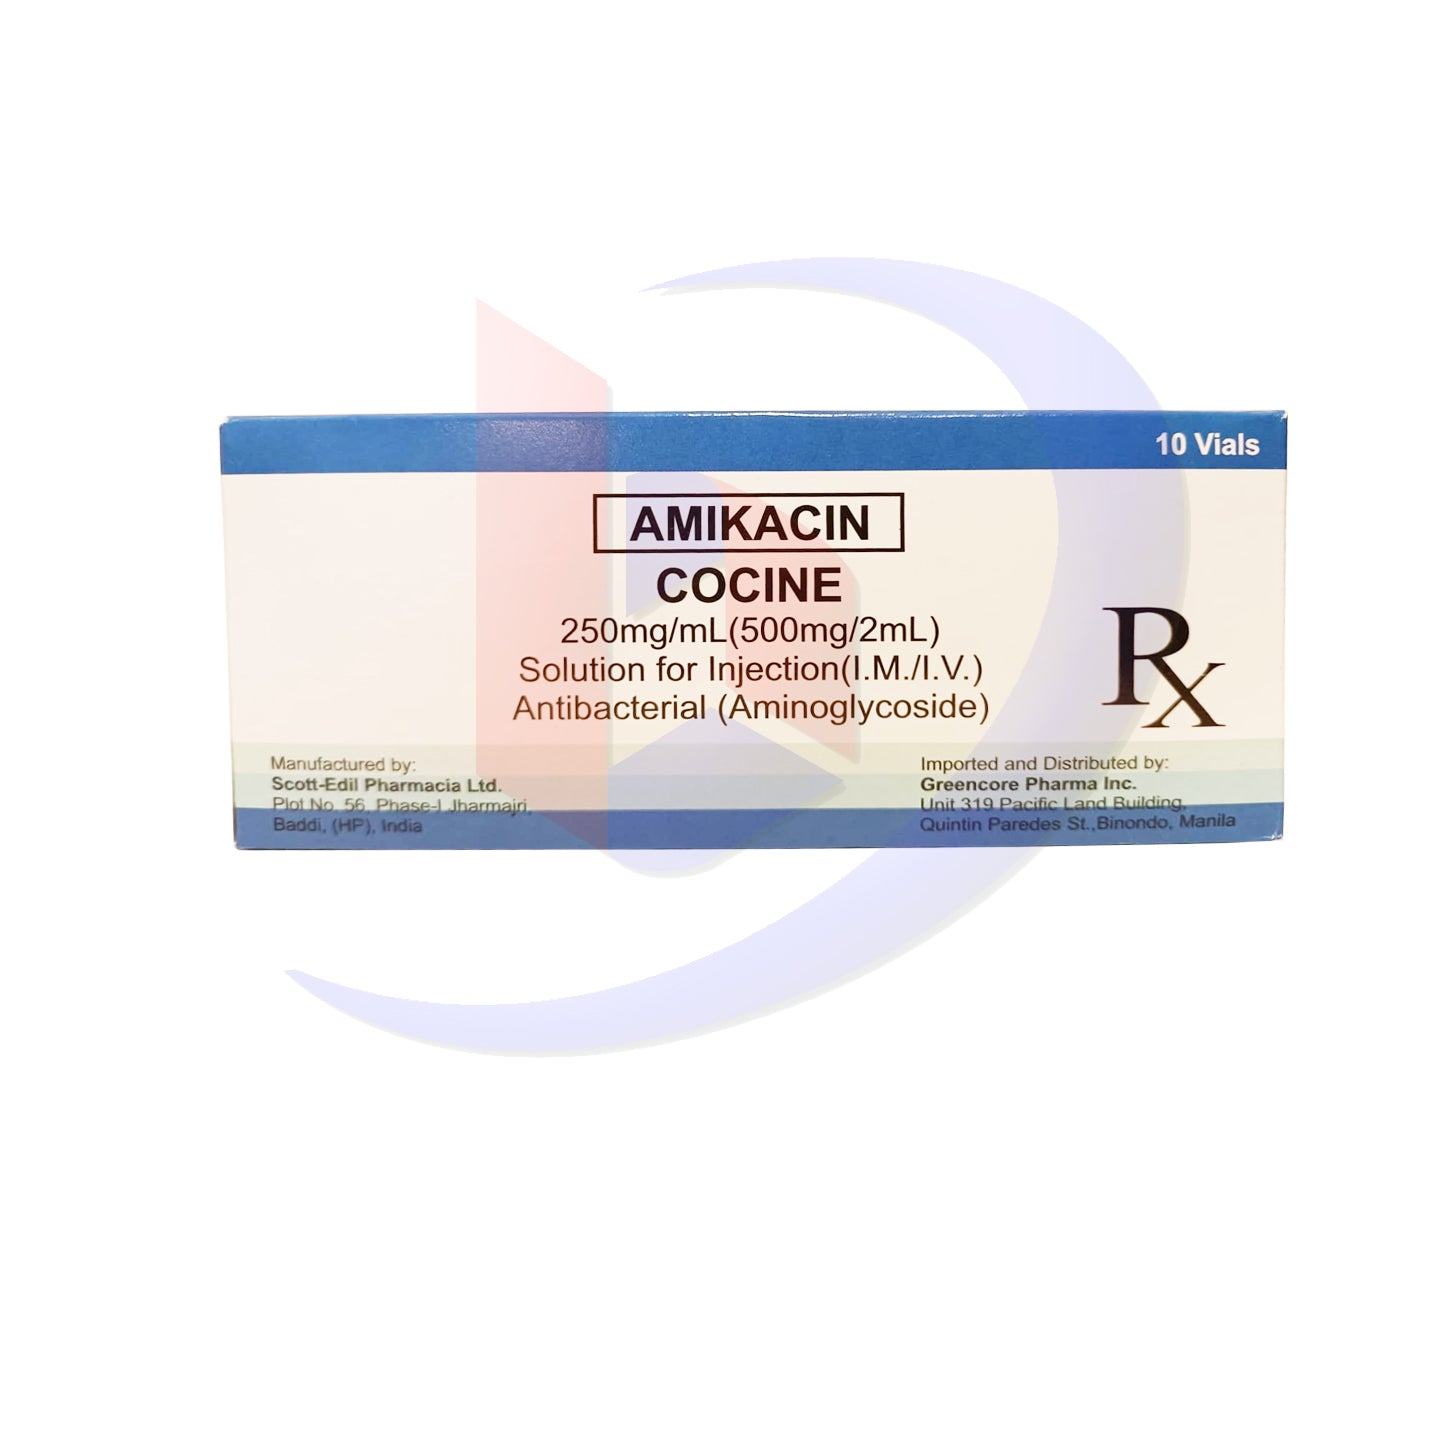 Amikacin (Cocine) 250mg/ml 500mg/2ml Solution for Injection I.M / I.V Vial 1's